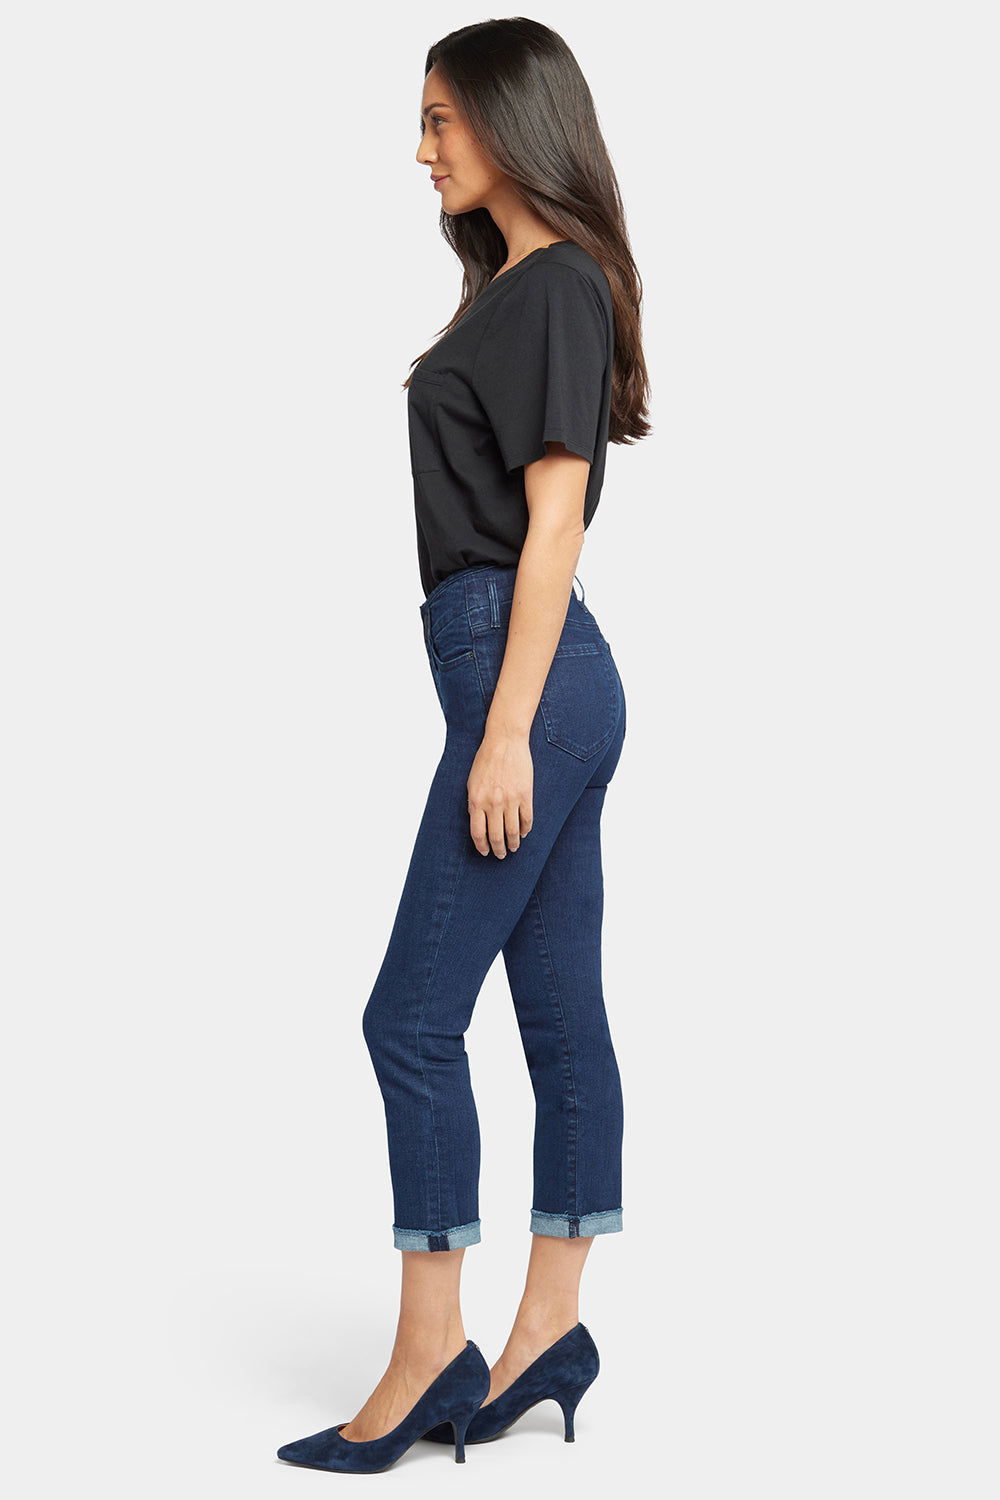 NYDJ Chloe Capri Jeans With Cuffs - Mystique